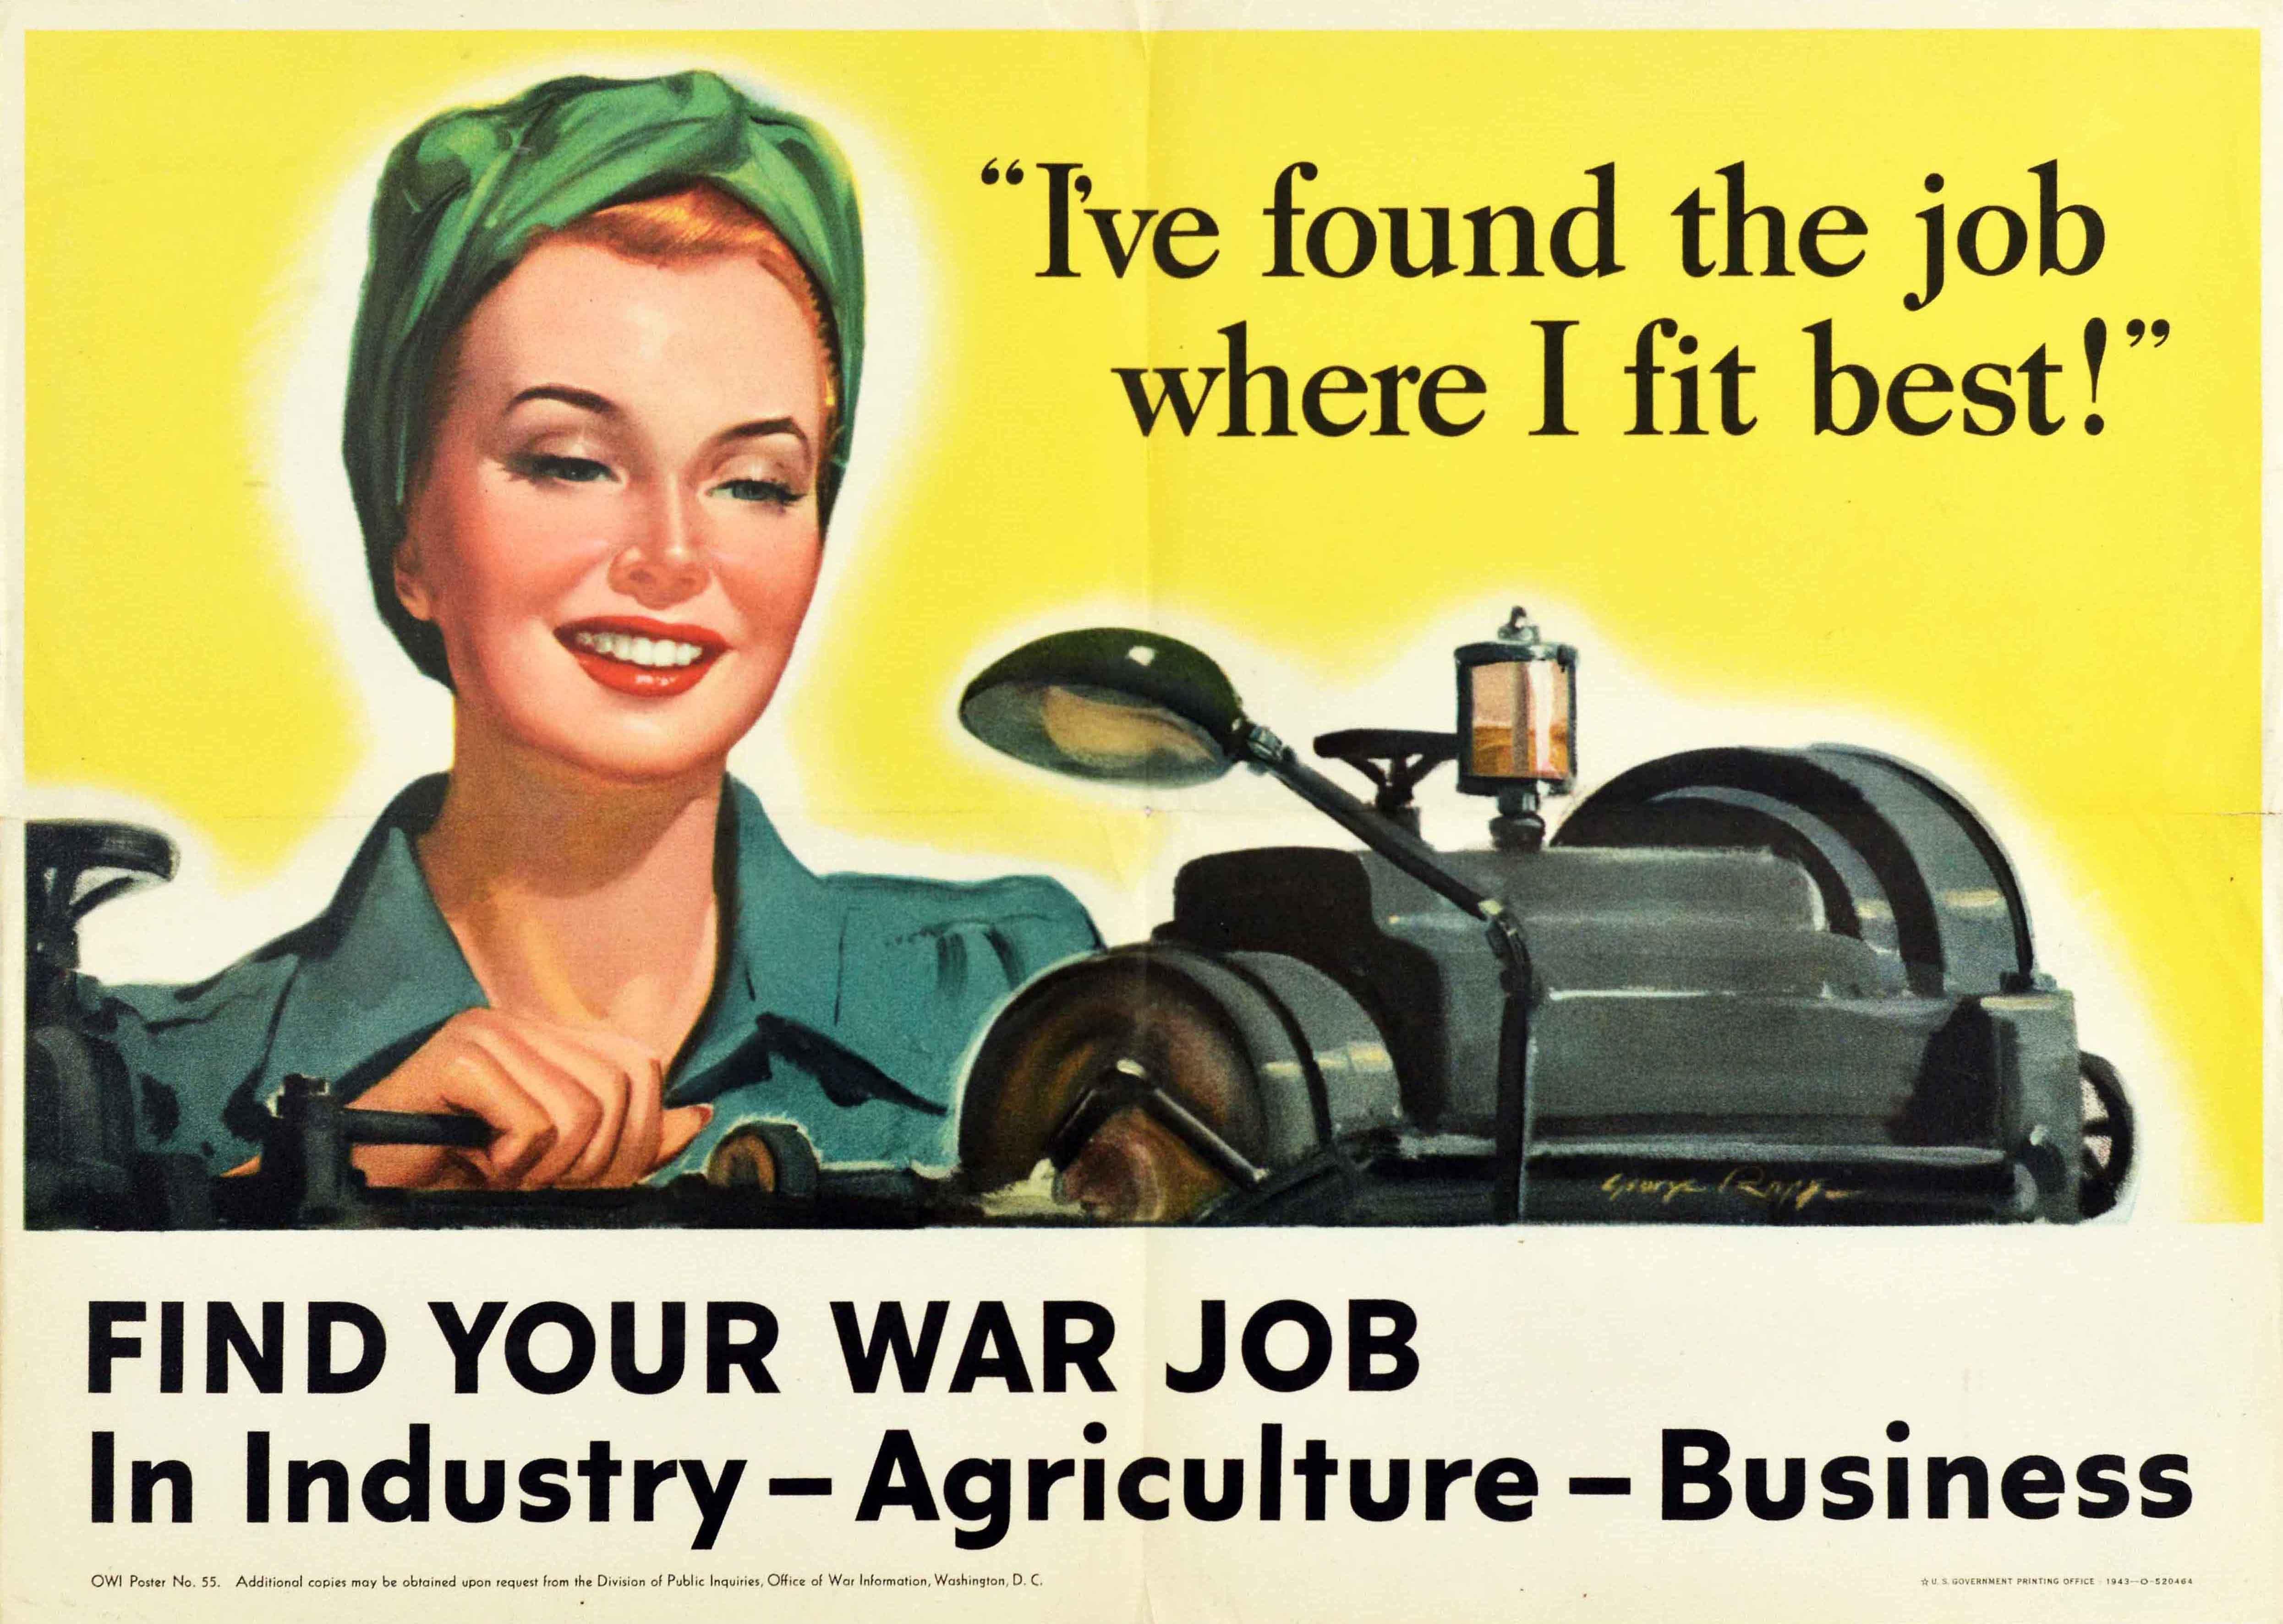 George Rapp Print - Original Vintage Poster Find Your War Job Industry Agriculture WWII Home Front